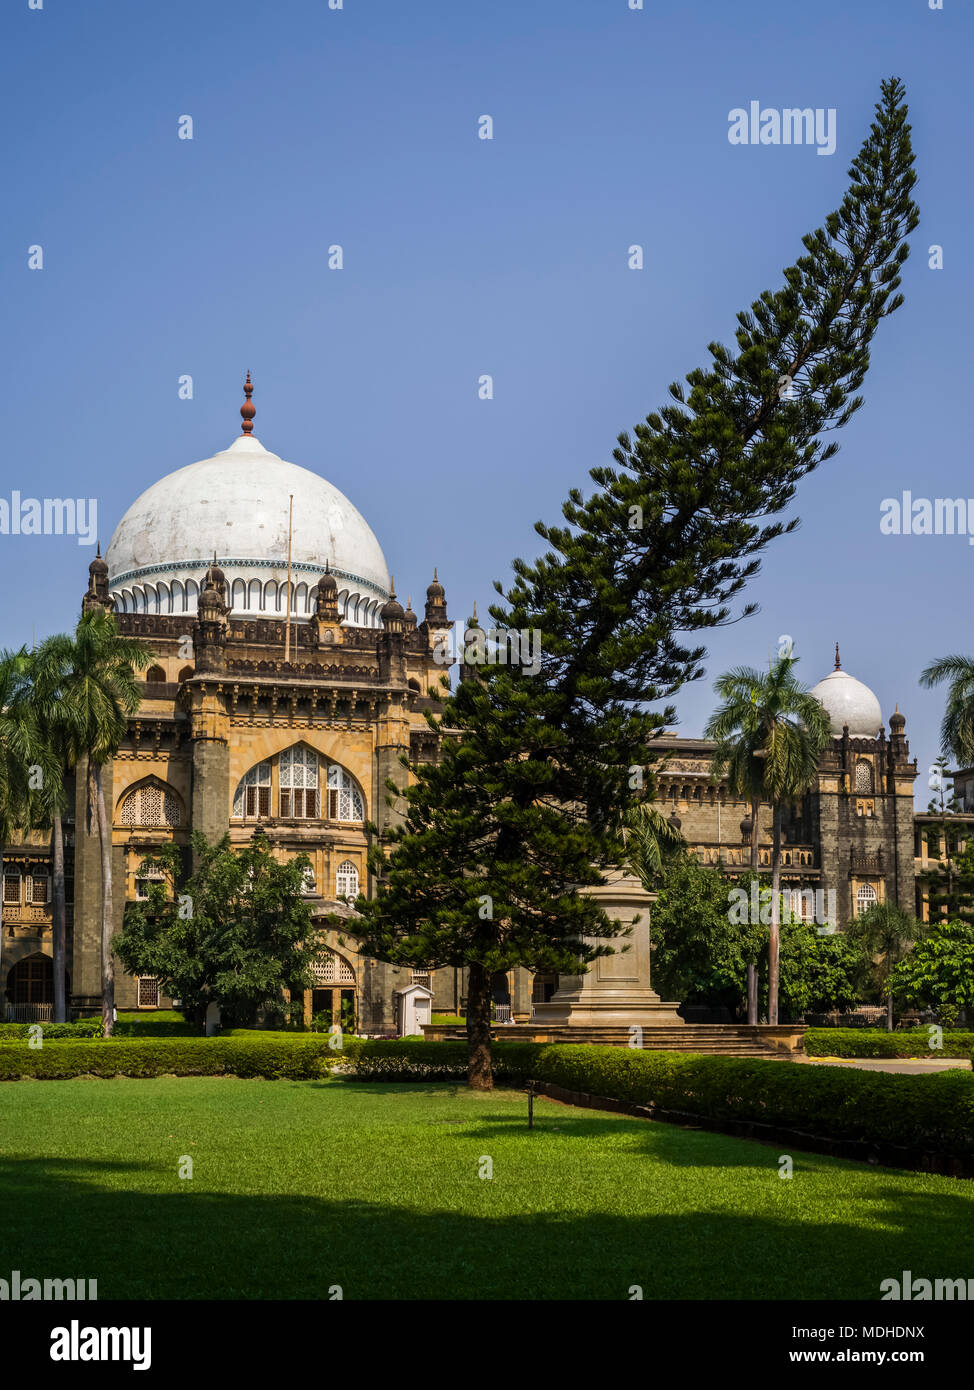 Prince of Wales Museum of Western India, renamed King Shivaji museum; Mumbai, Maharashtra, India Stock Photo